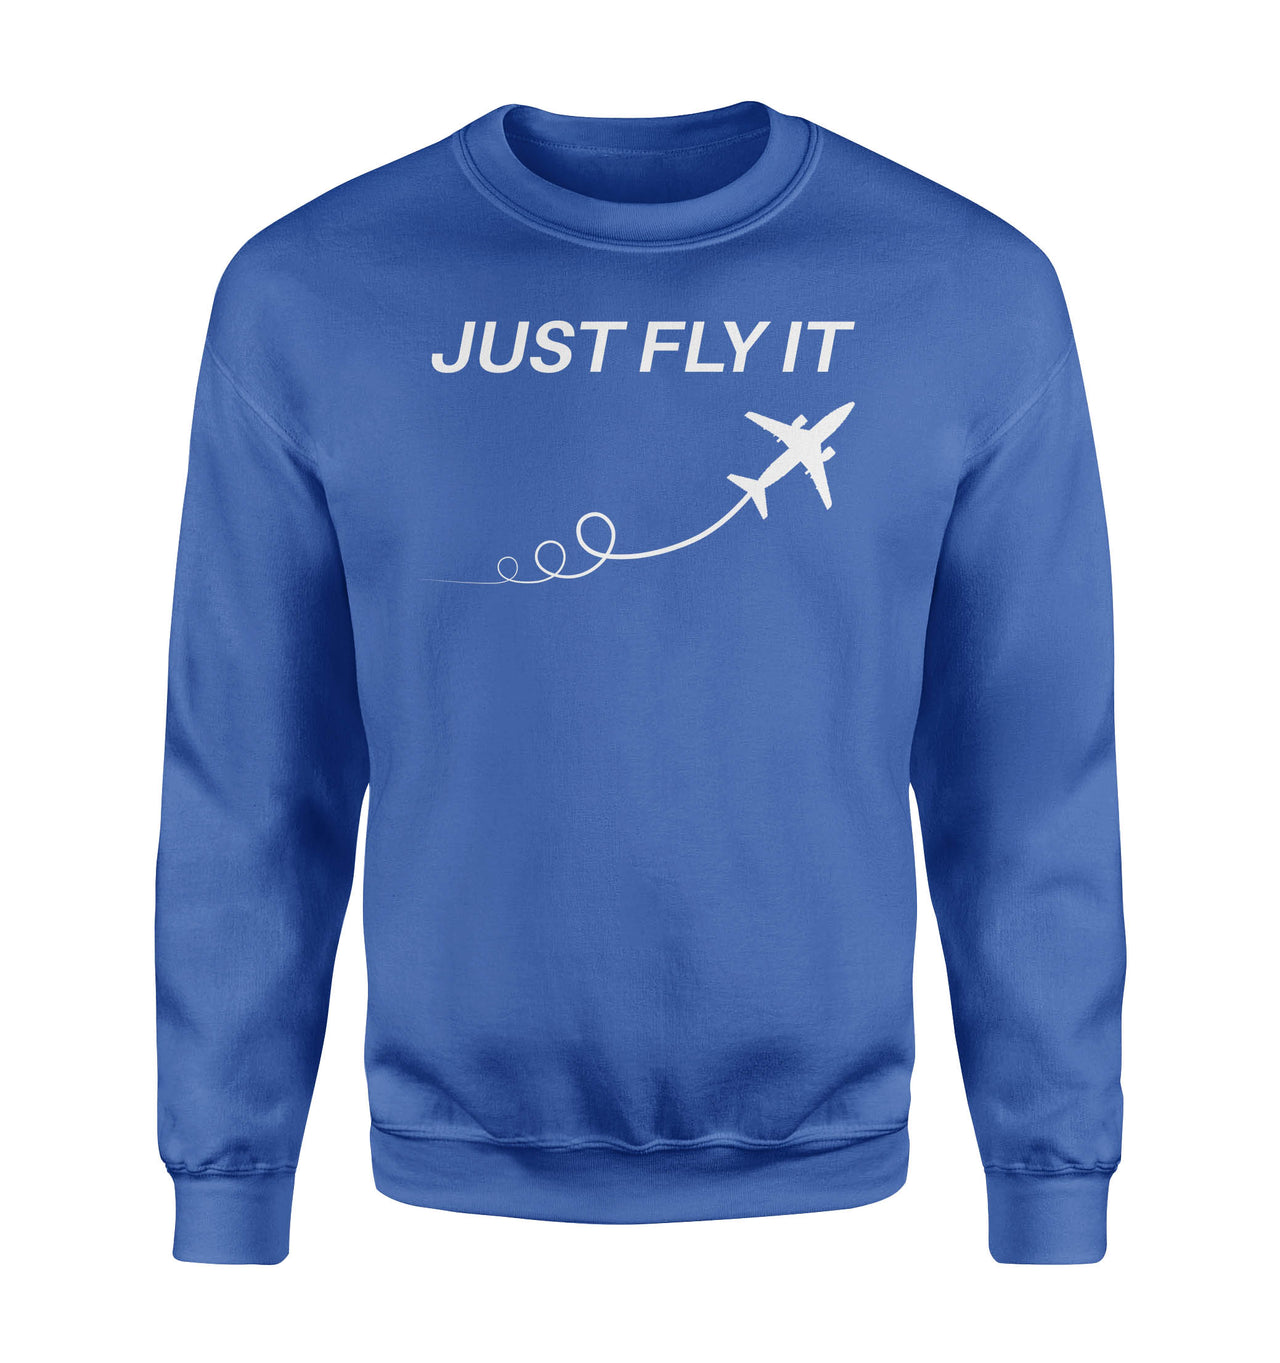 Just Fly It Designed Sweatshirts